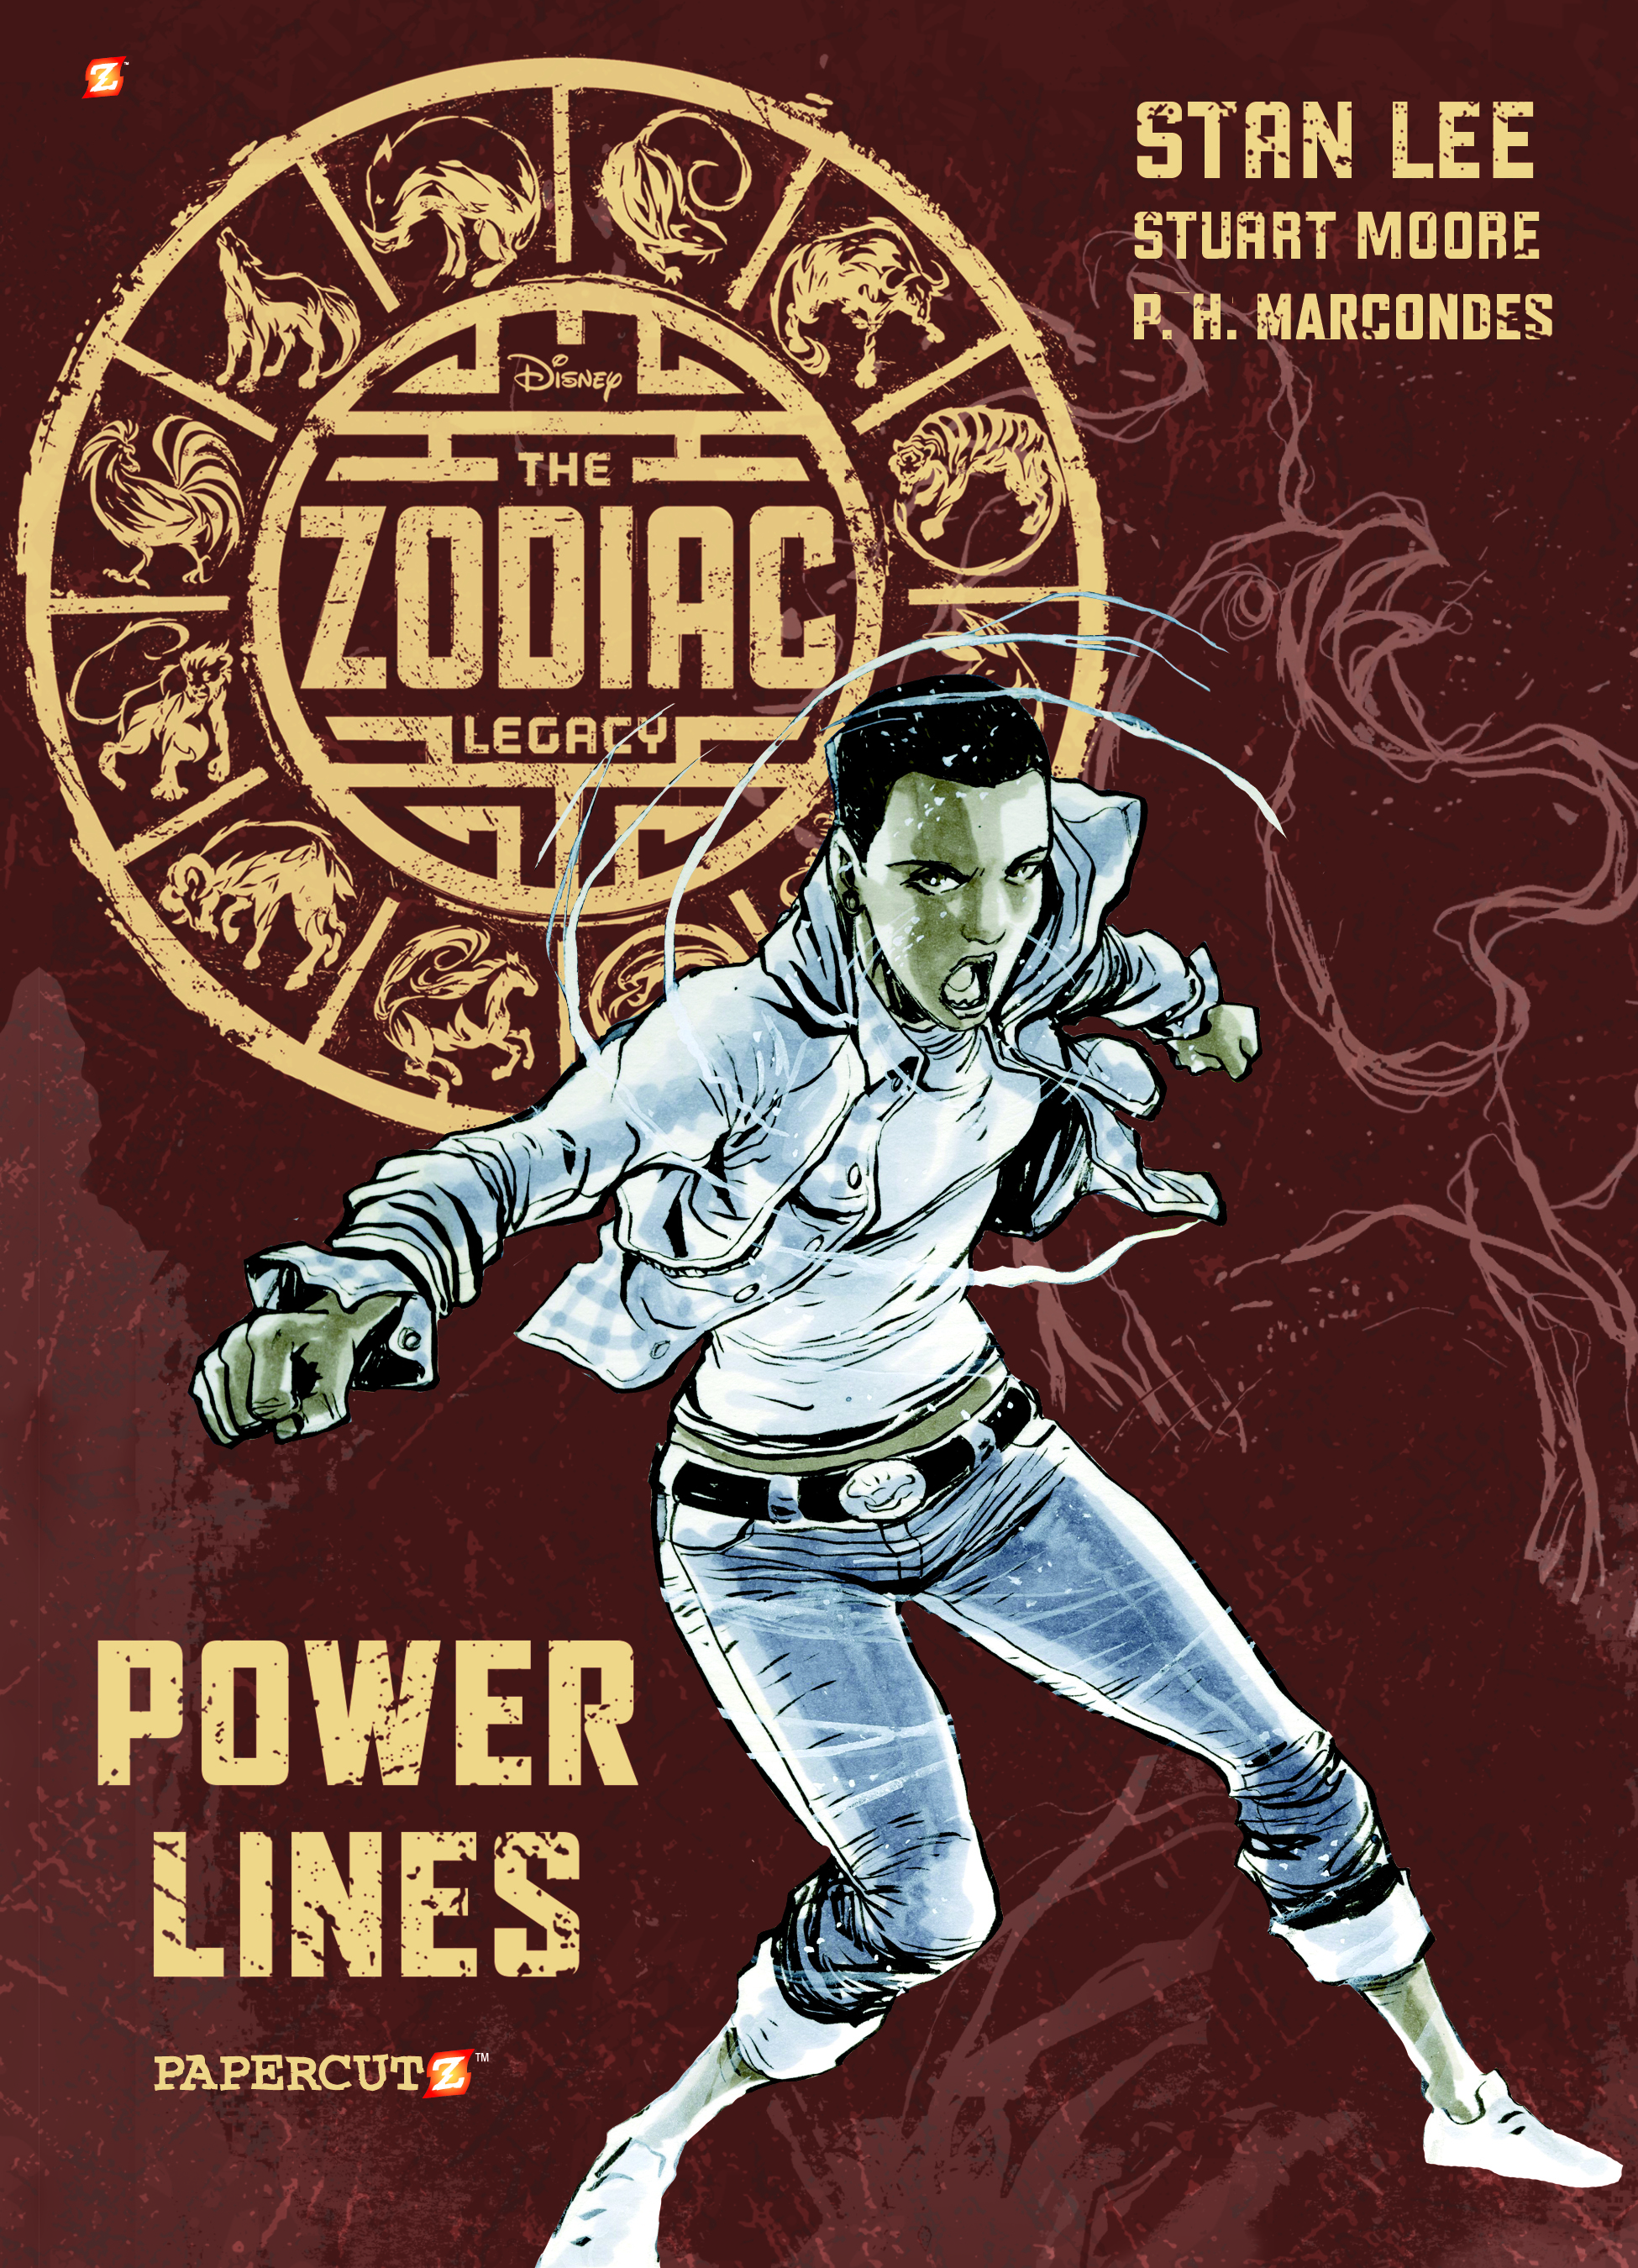 The Zodiac Legacy #2: “Power Lines”